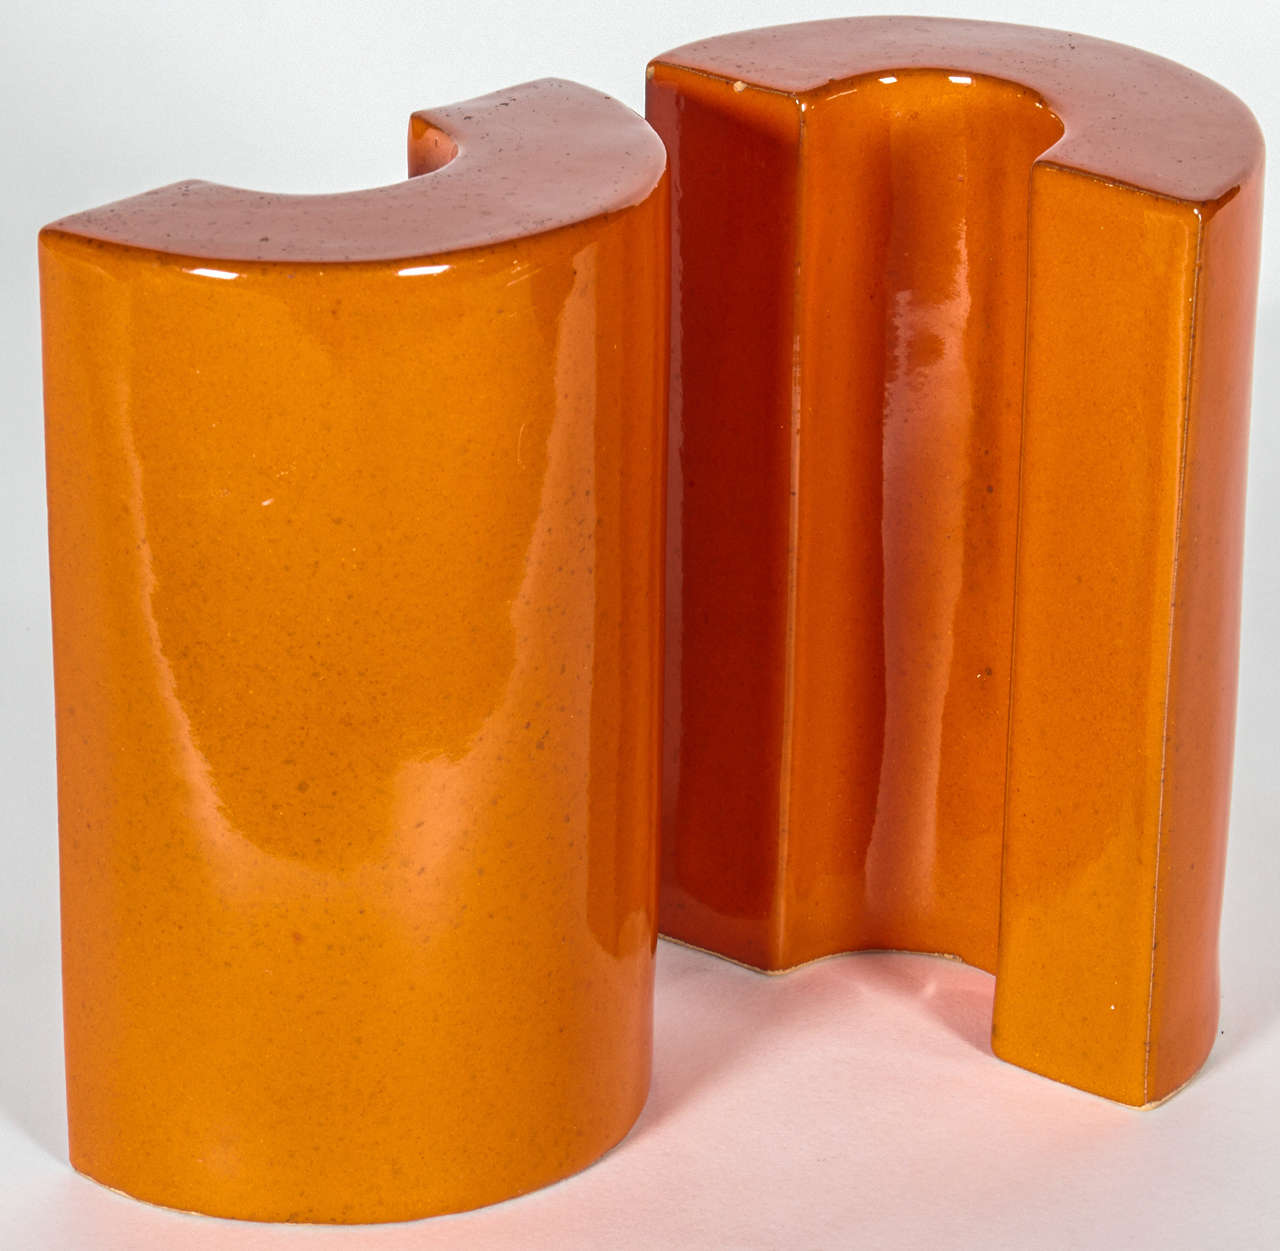 Italian Orange Pottery Bookends by Raymor Italy